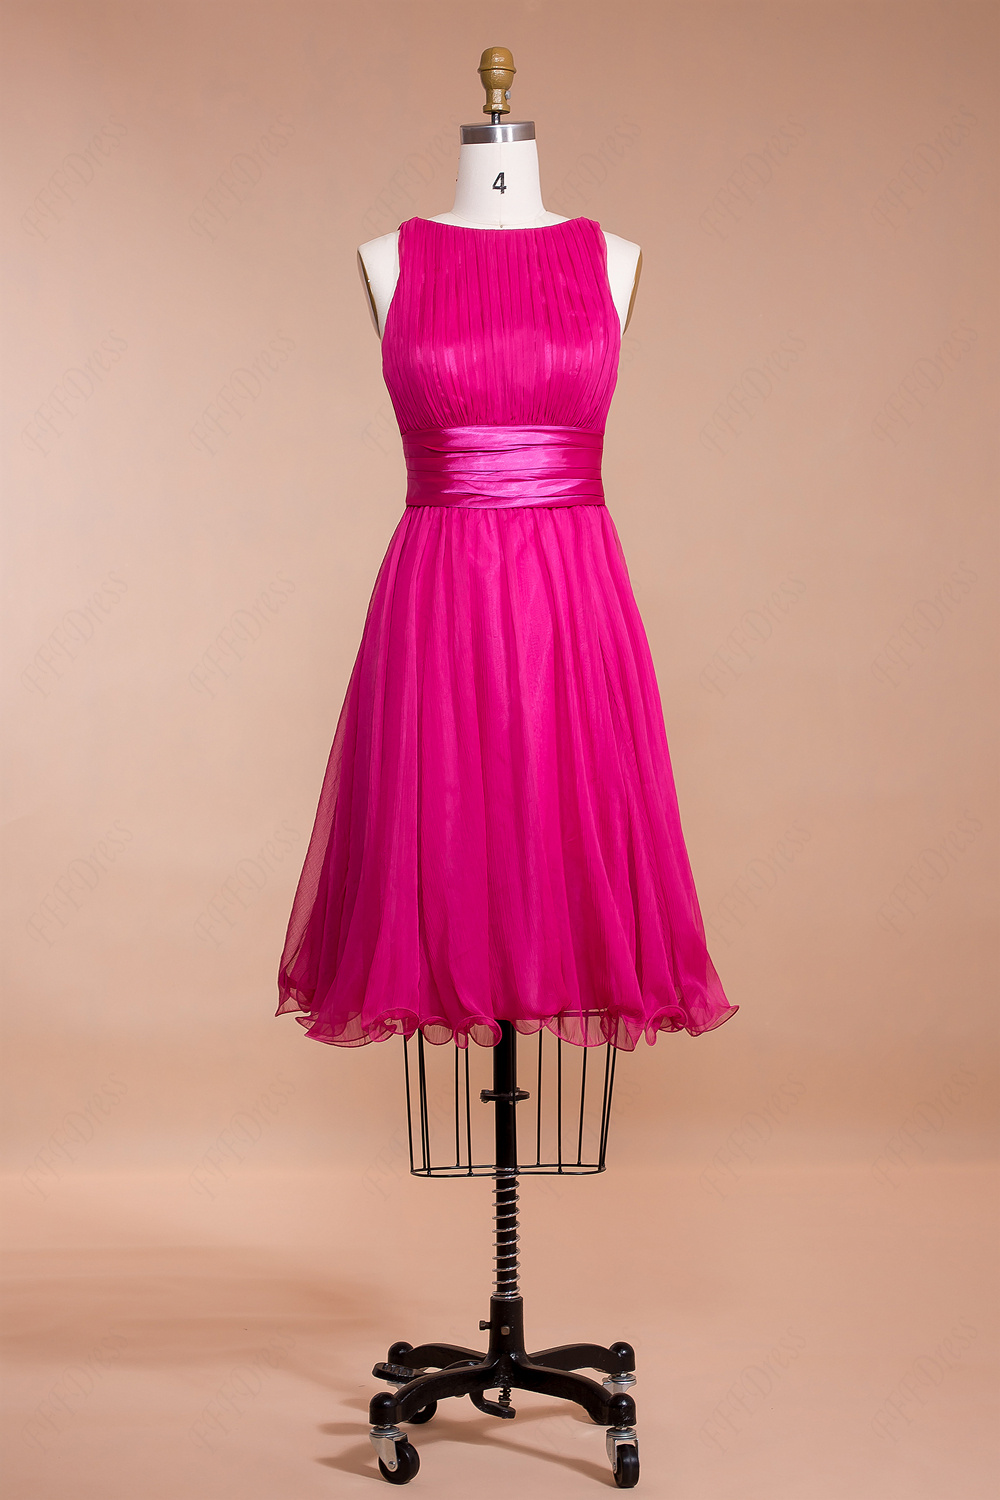 Knee Length Hot Pink Prom Dress, Bridesmaid Dress on Luulla